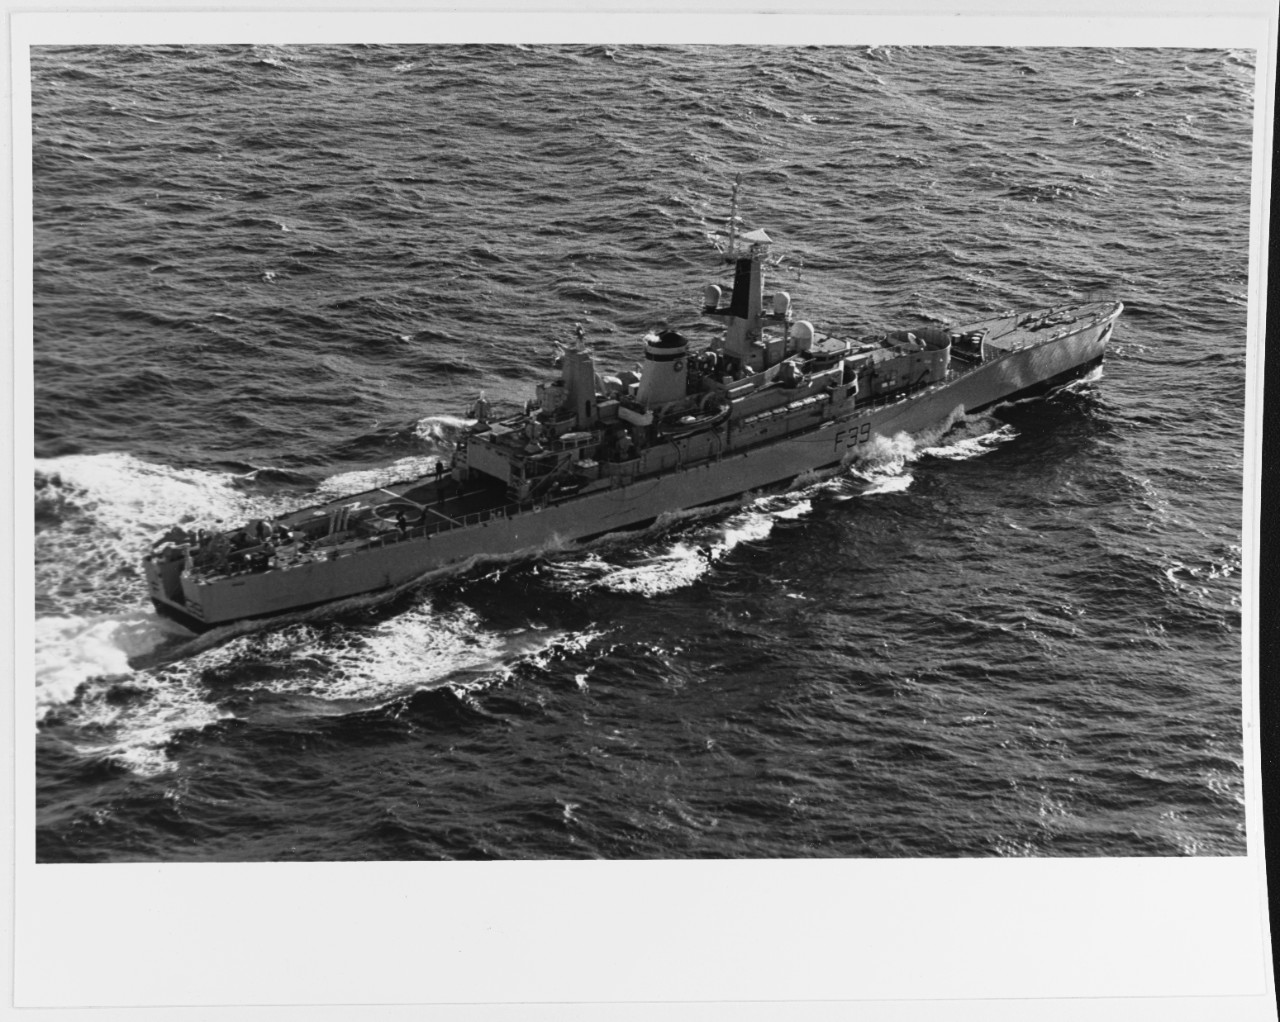 HMS NAIAD (F-39) (British Frigate, 1963)